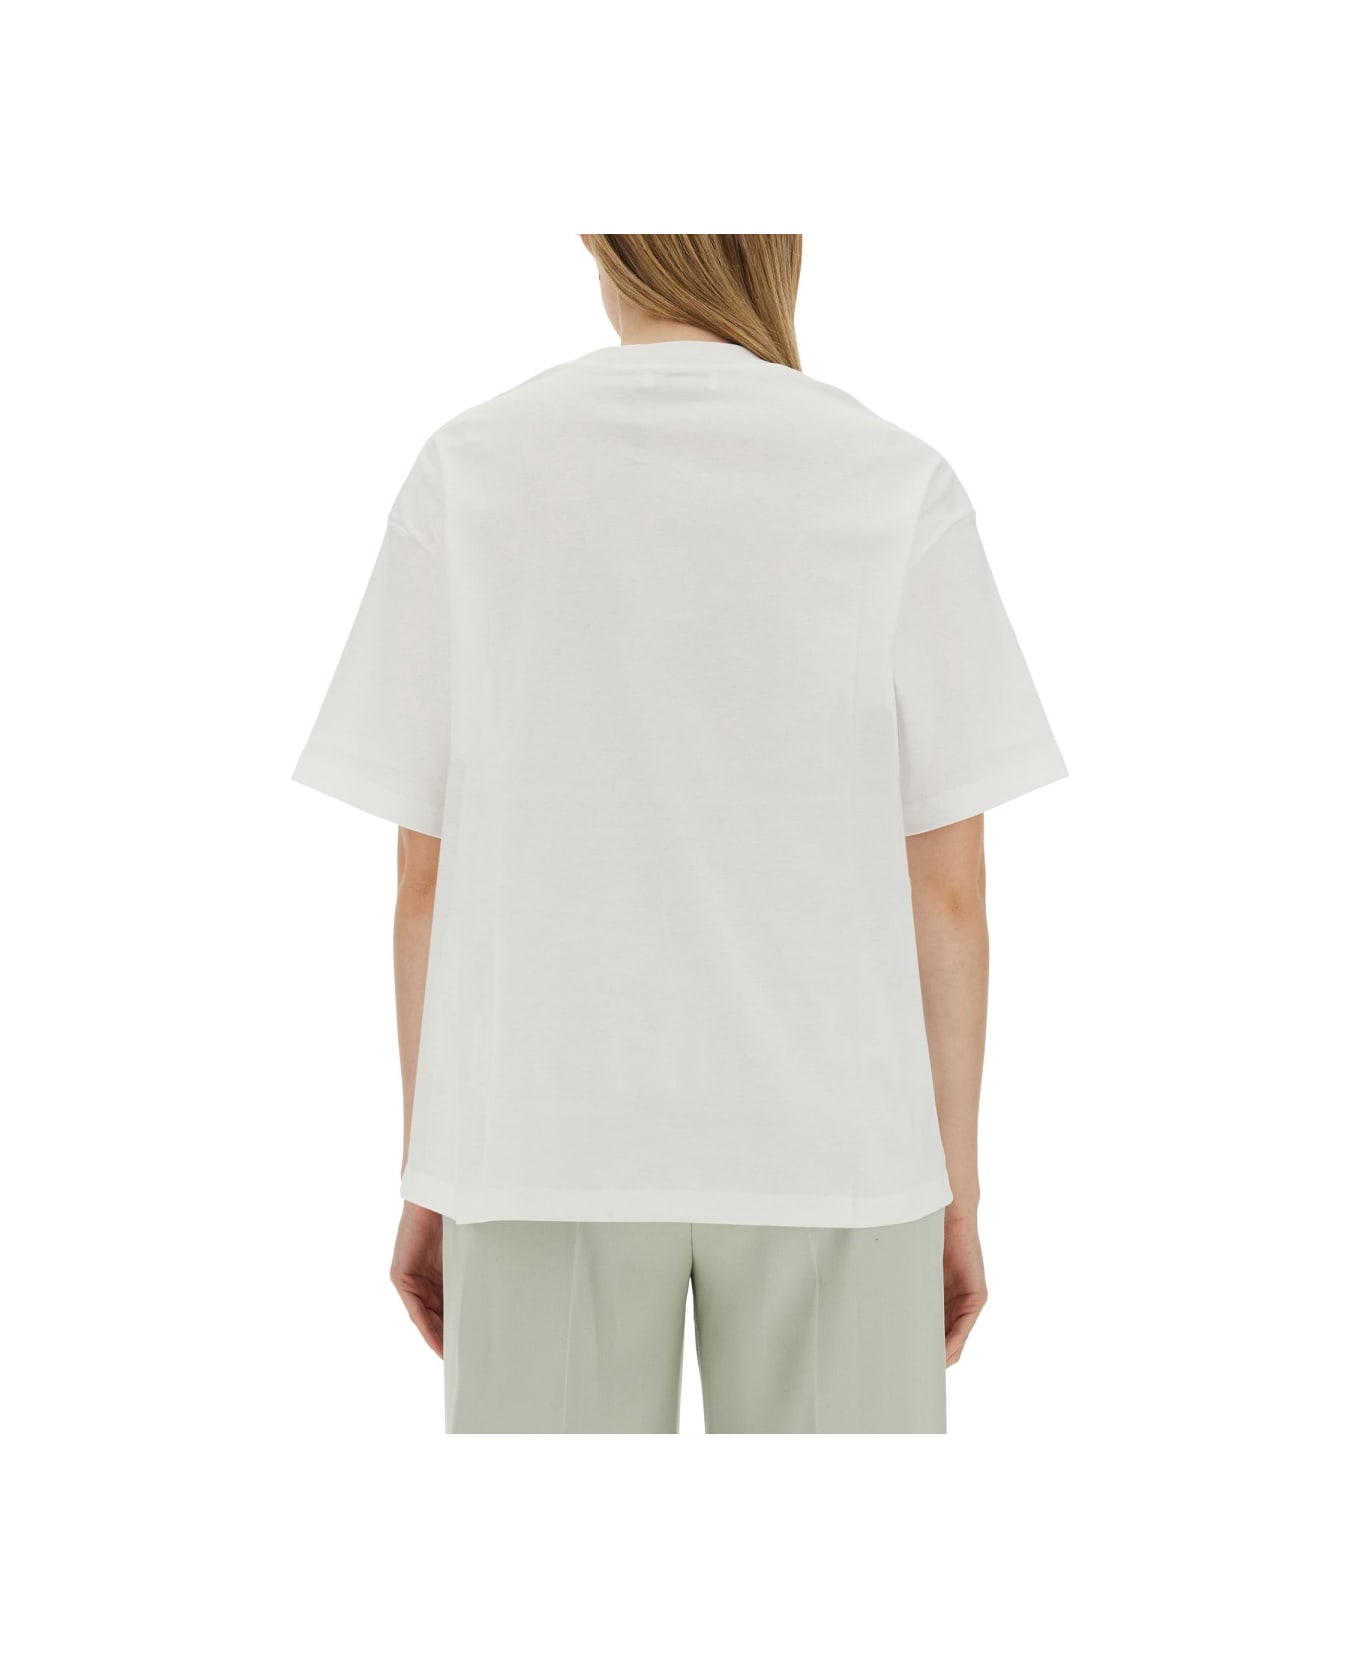 Lanvin T-shirt With Logo - WHITE Tシャツ